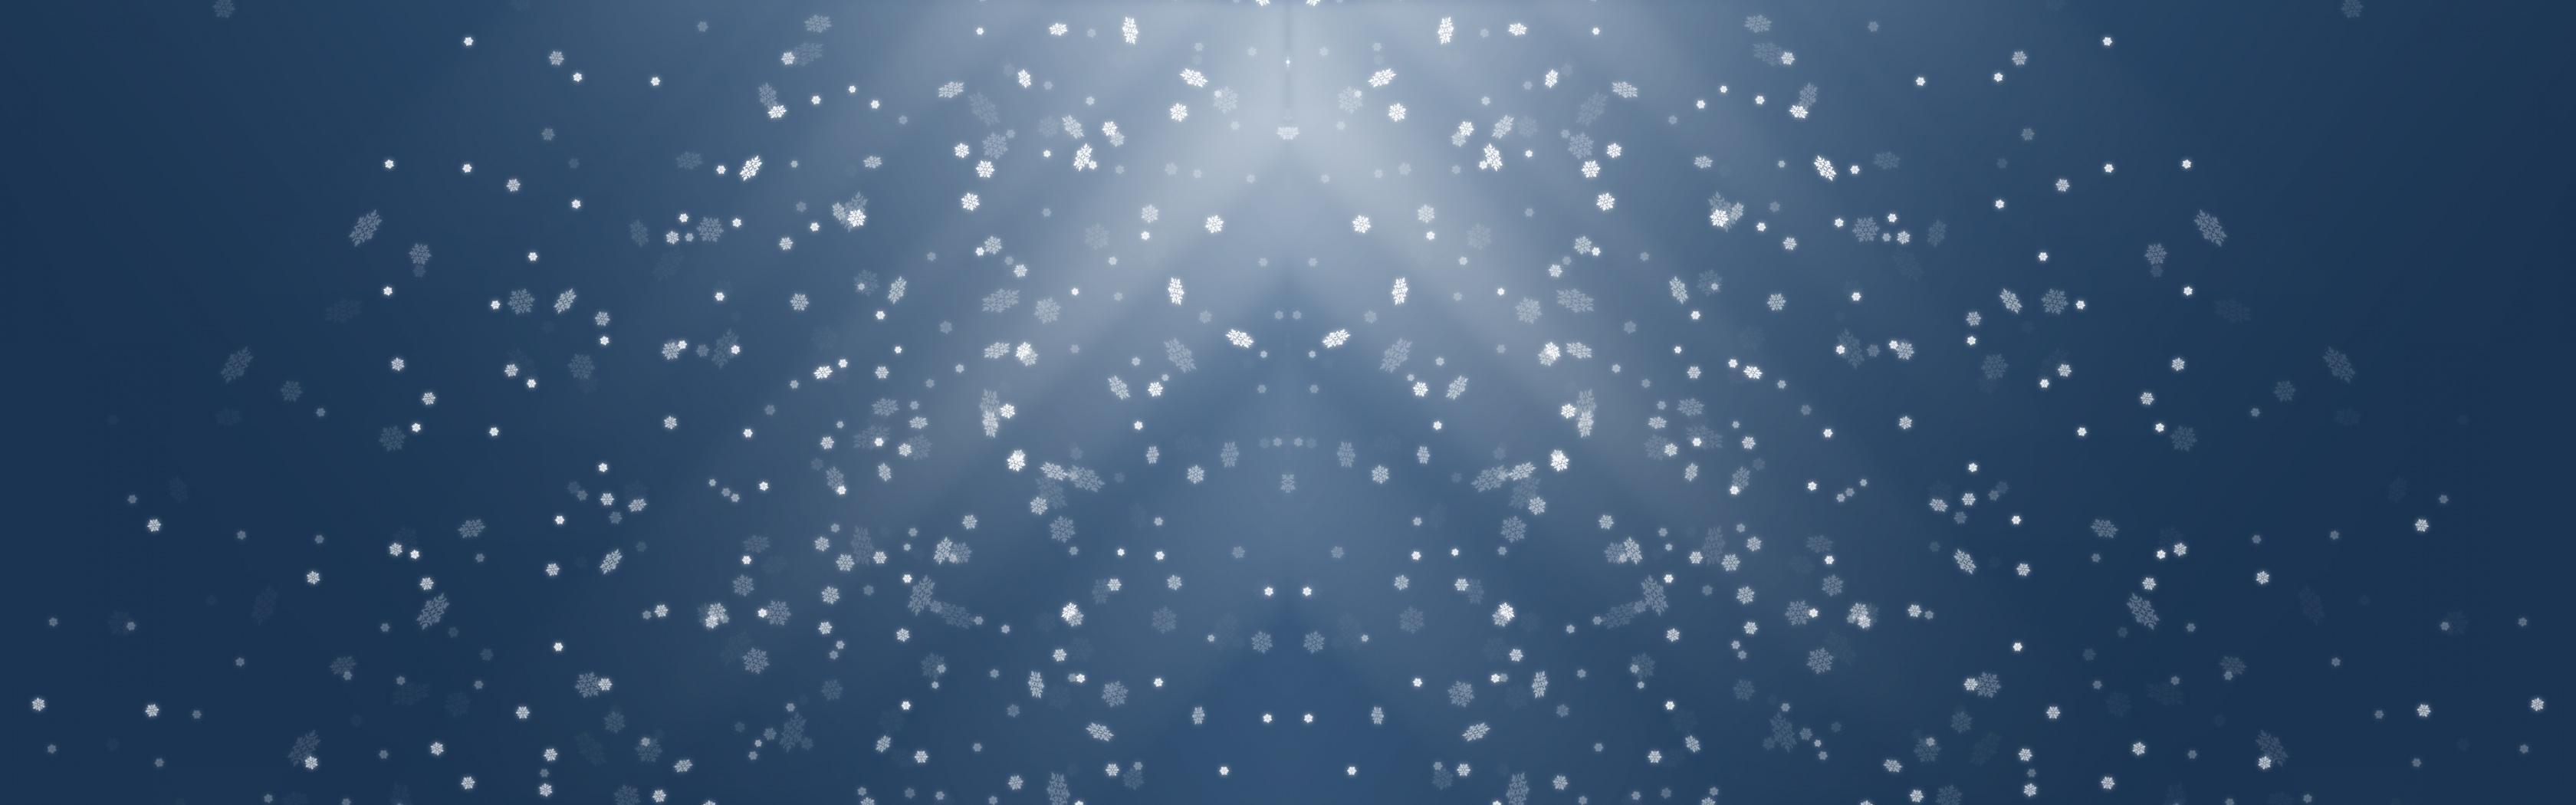 snowflake, snowfall, artistic, snow